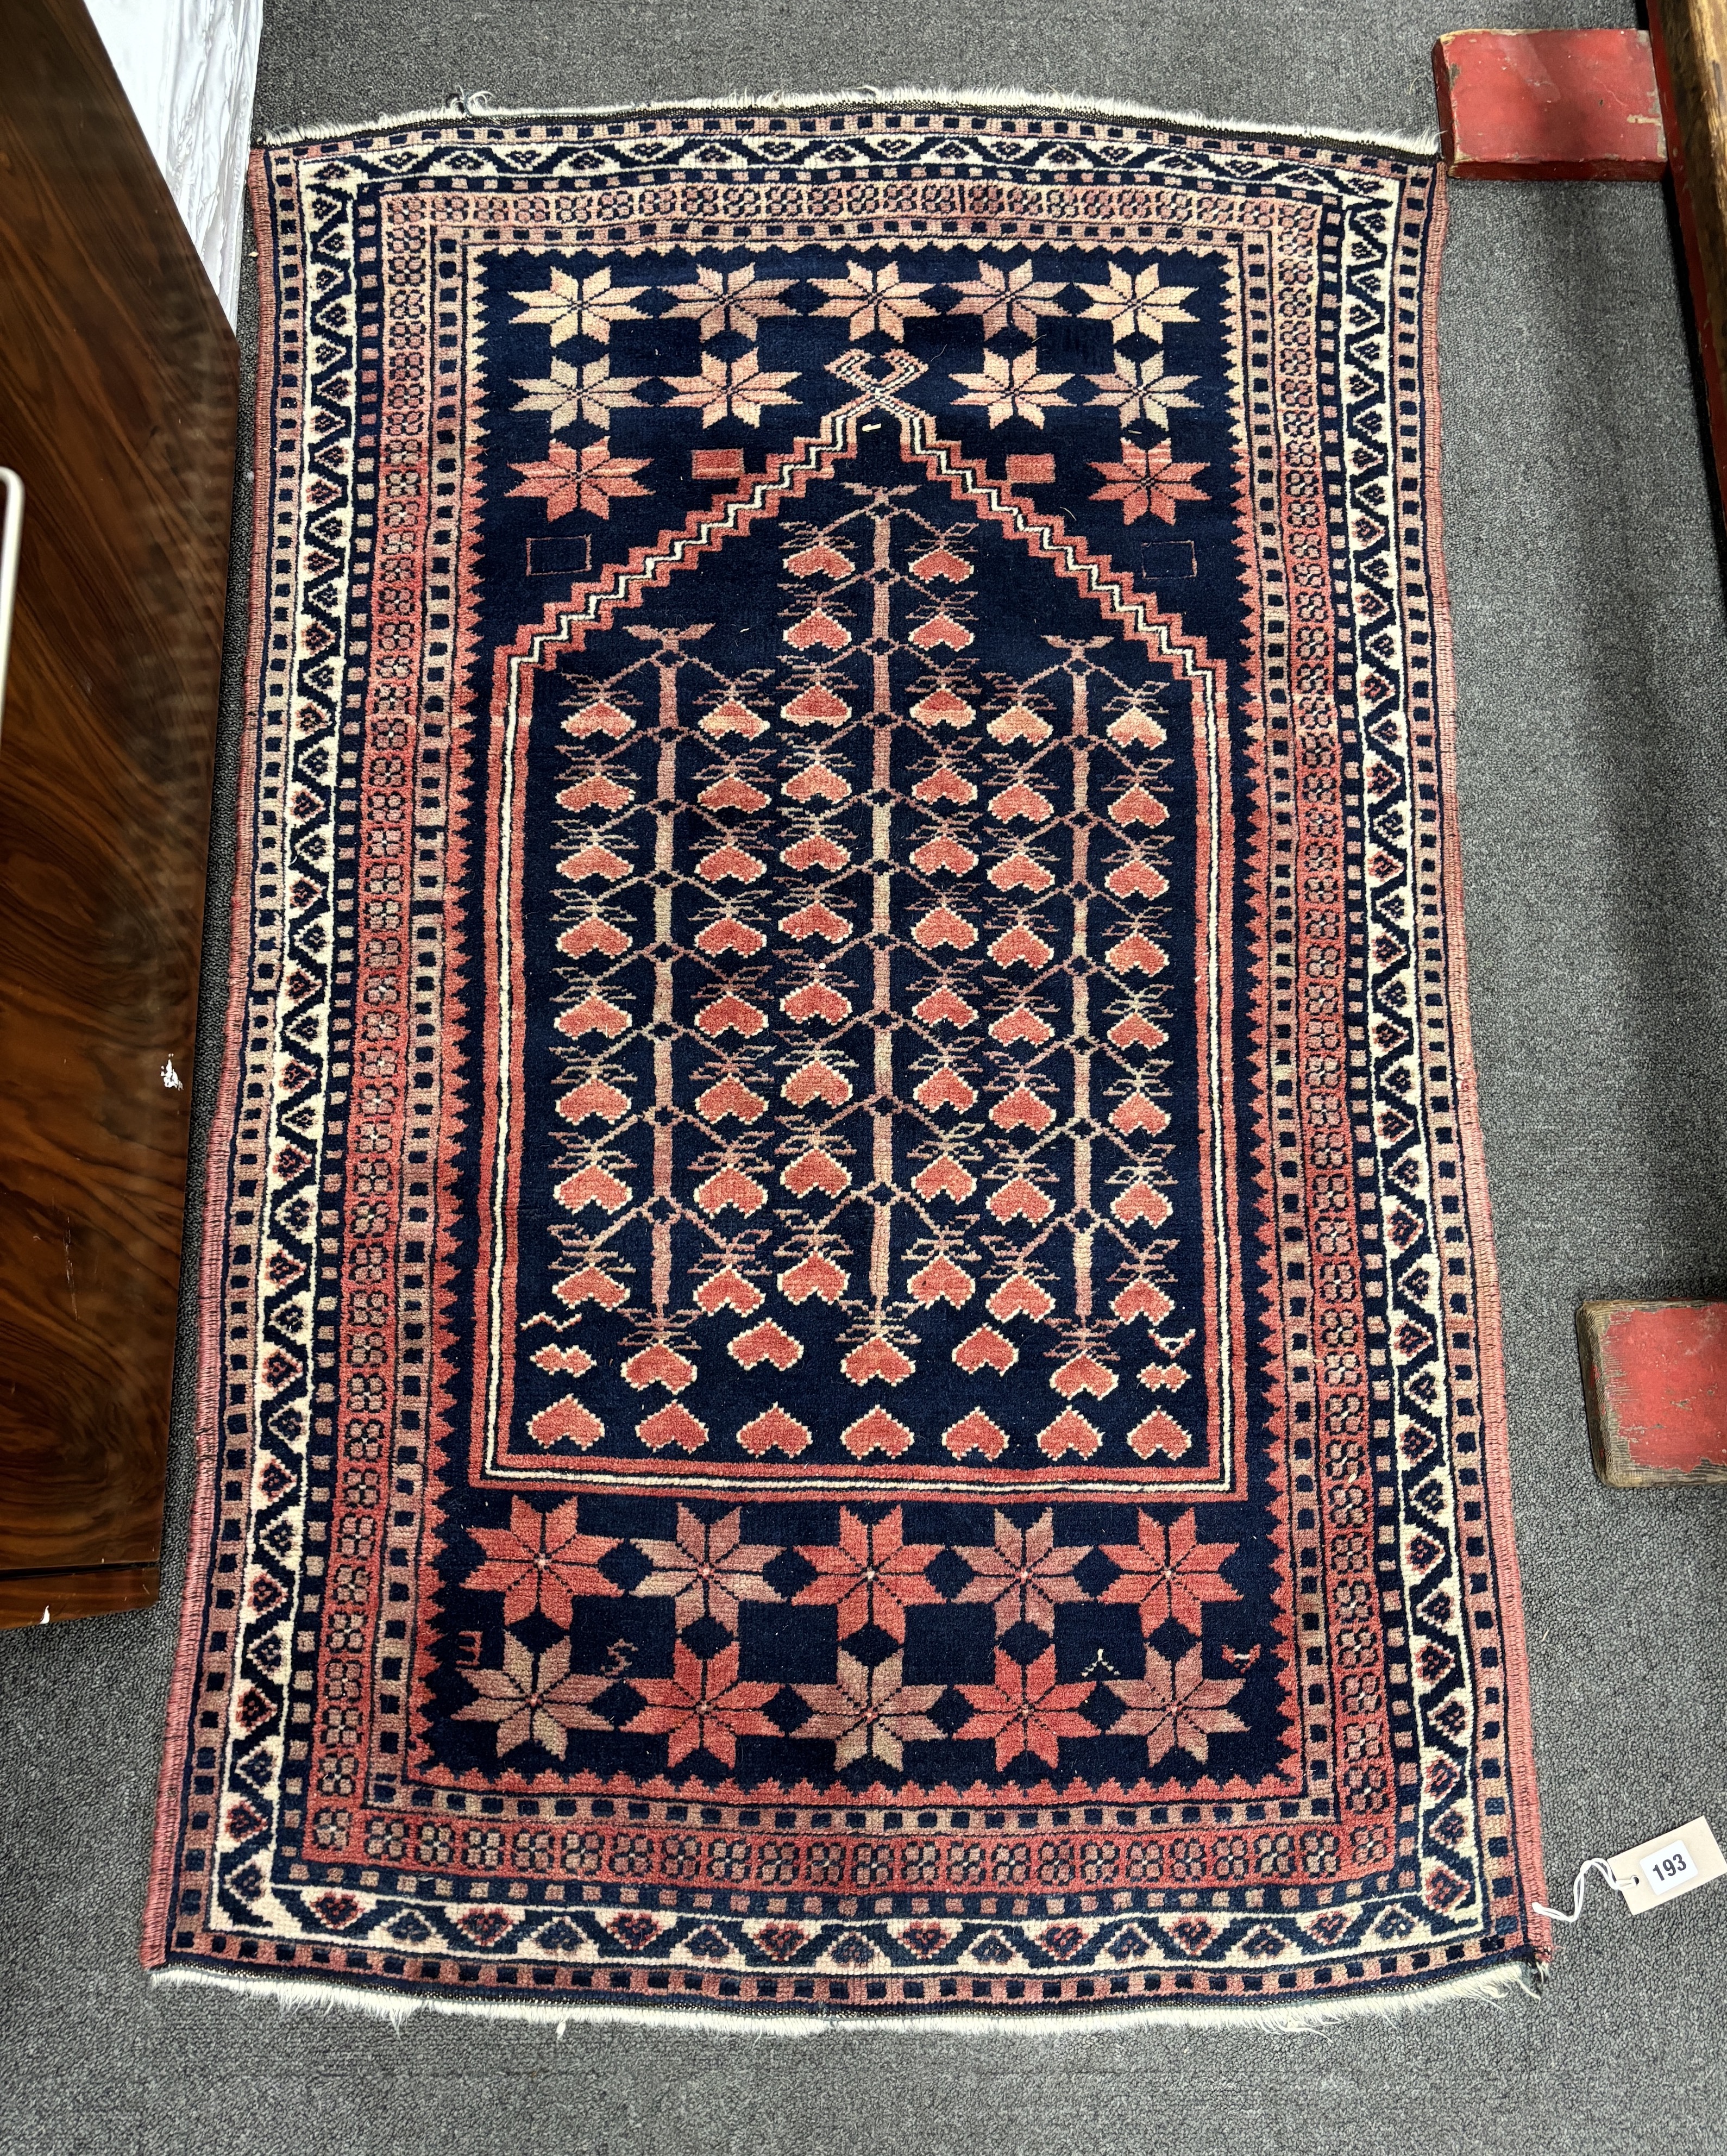 A Persian prayer rug, 140 x 88cm